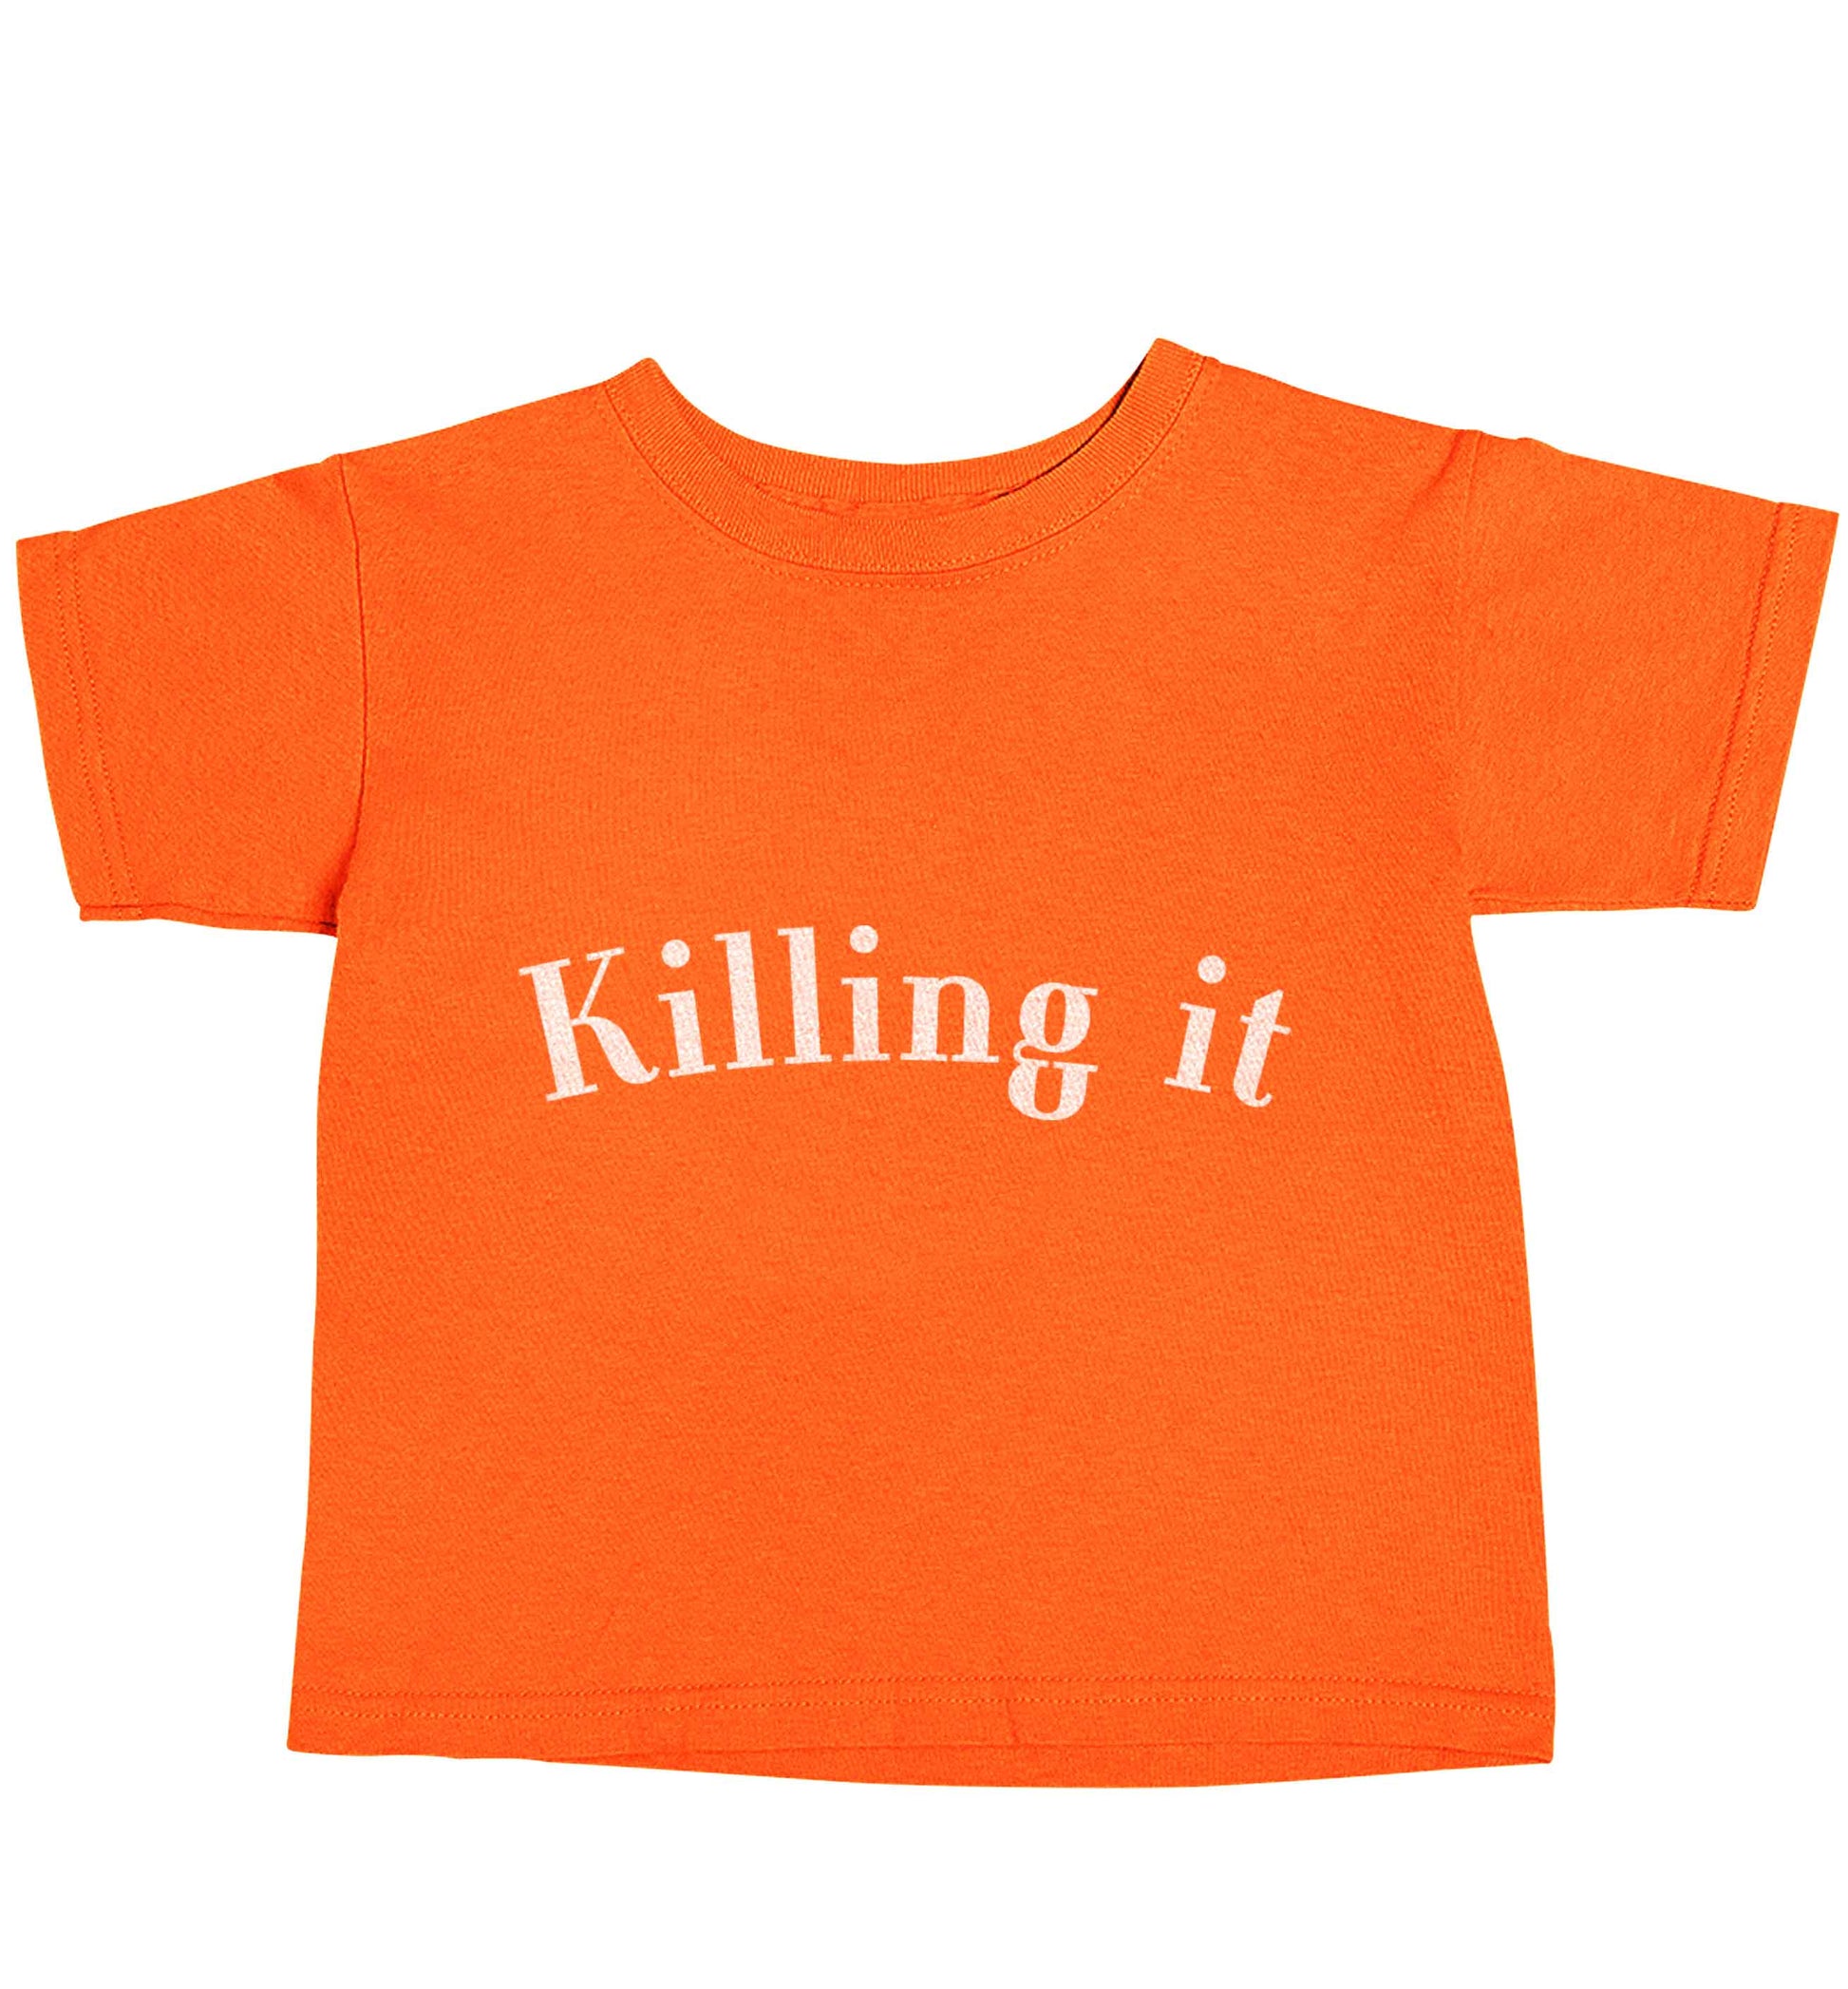 Killing it orange baby toddler Tshirt 2 Years